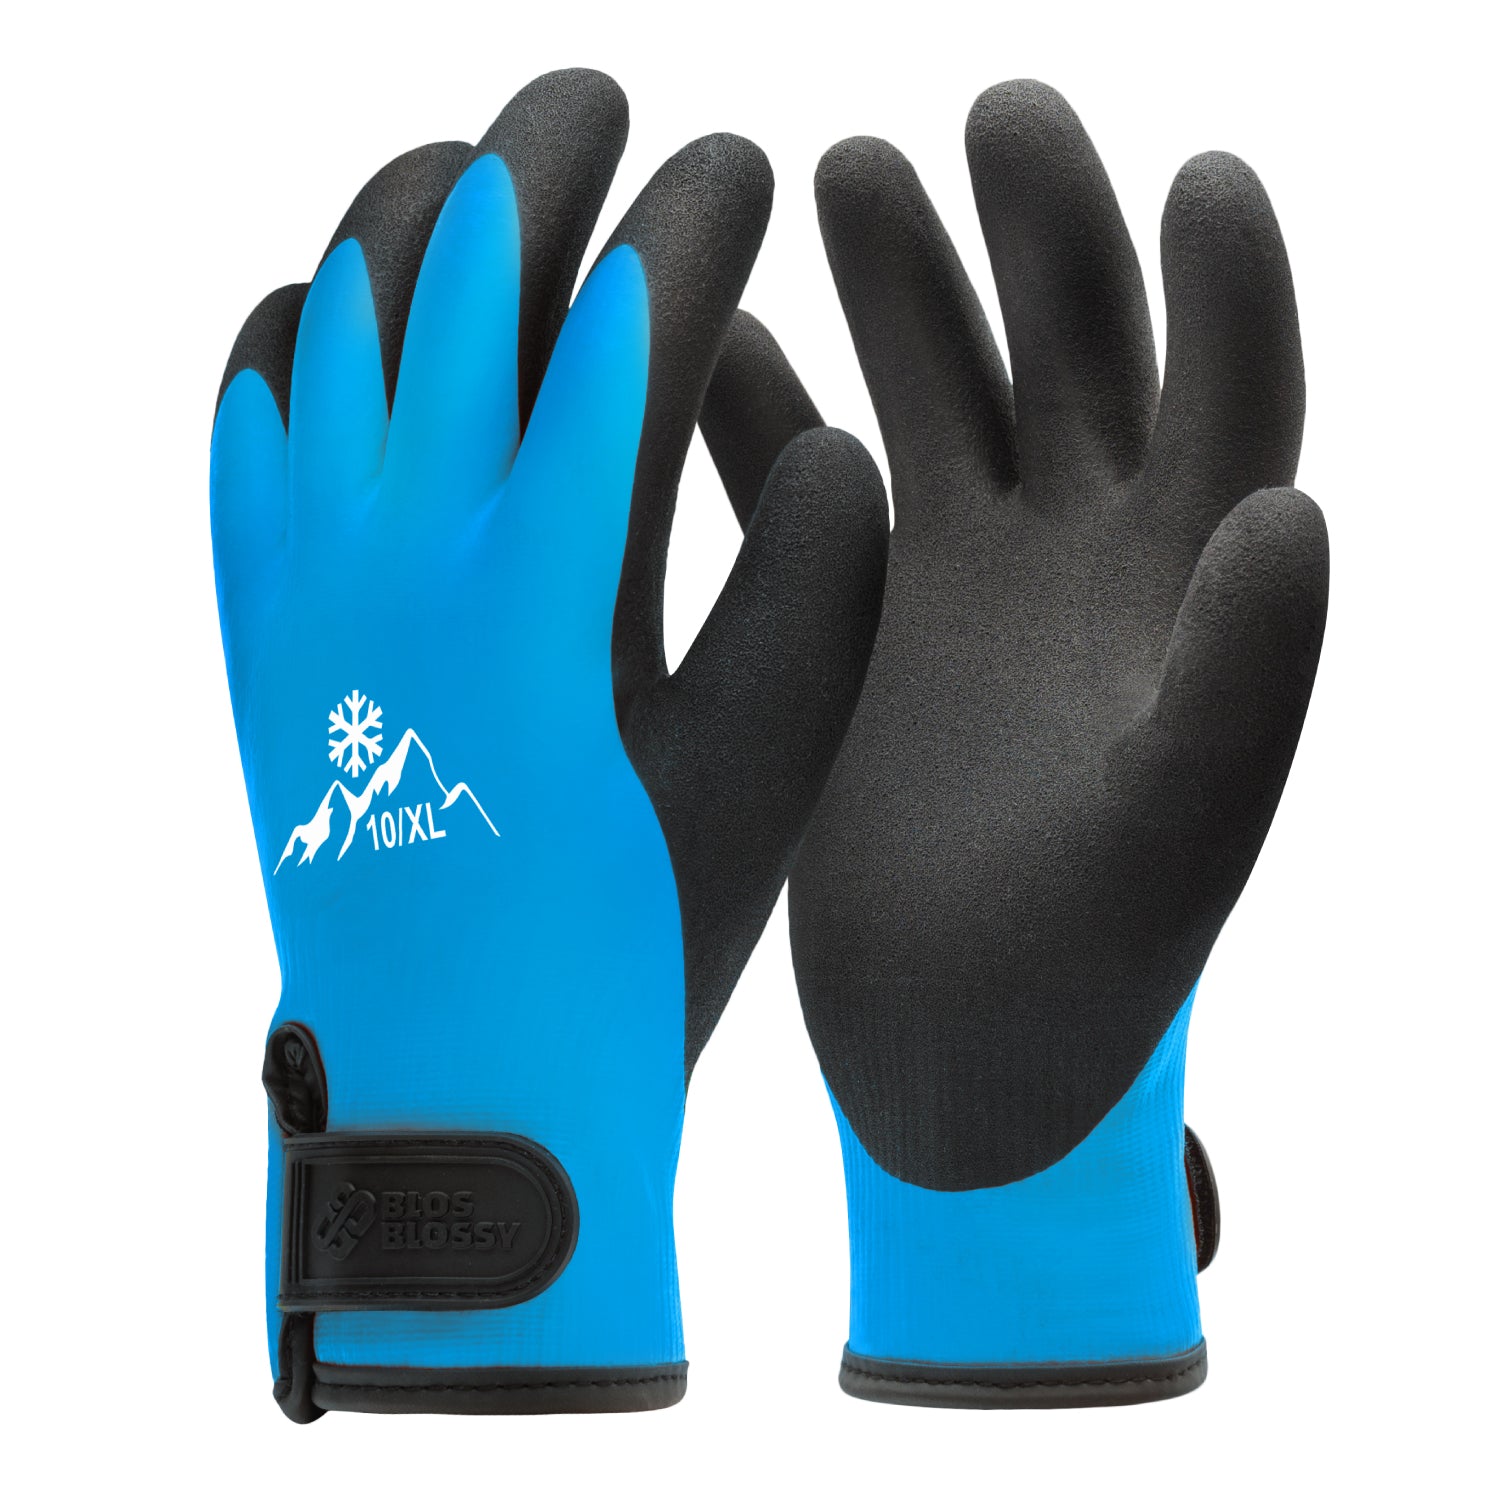 Heavy Duty Rubber Latex Coated Work Gloves